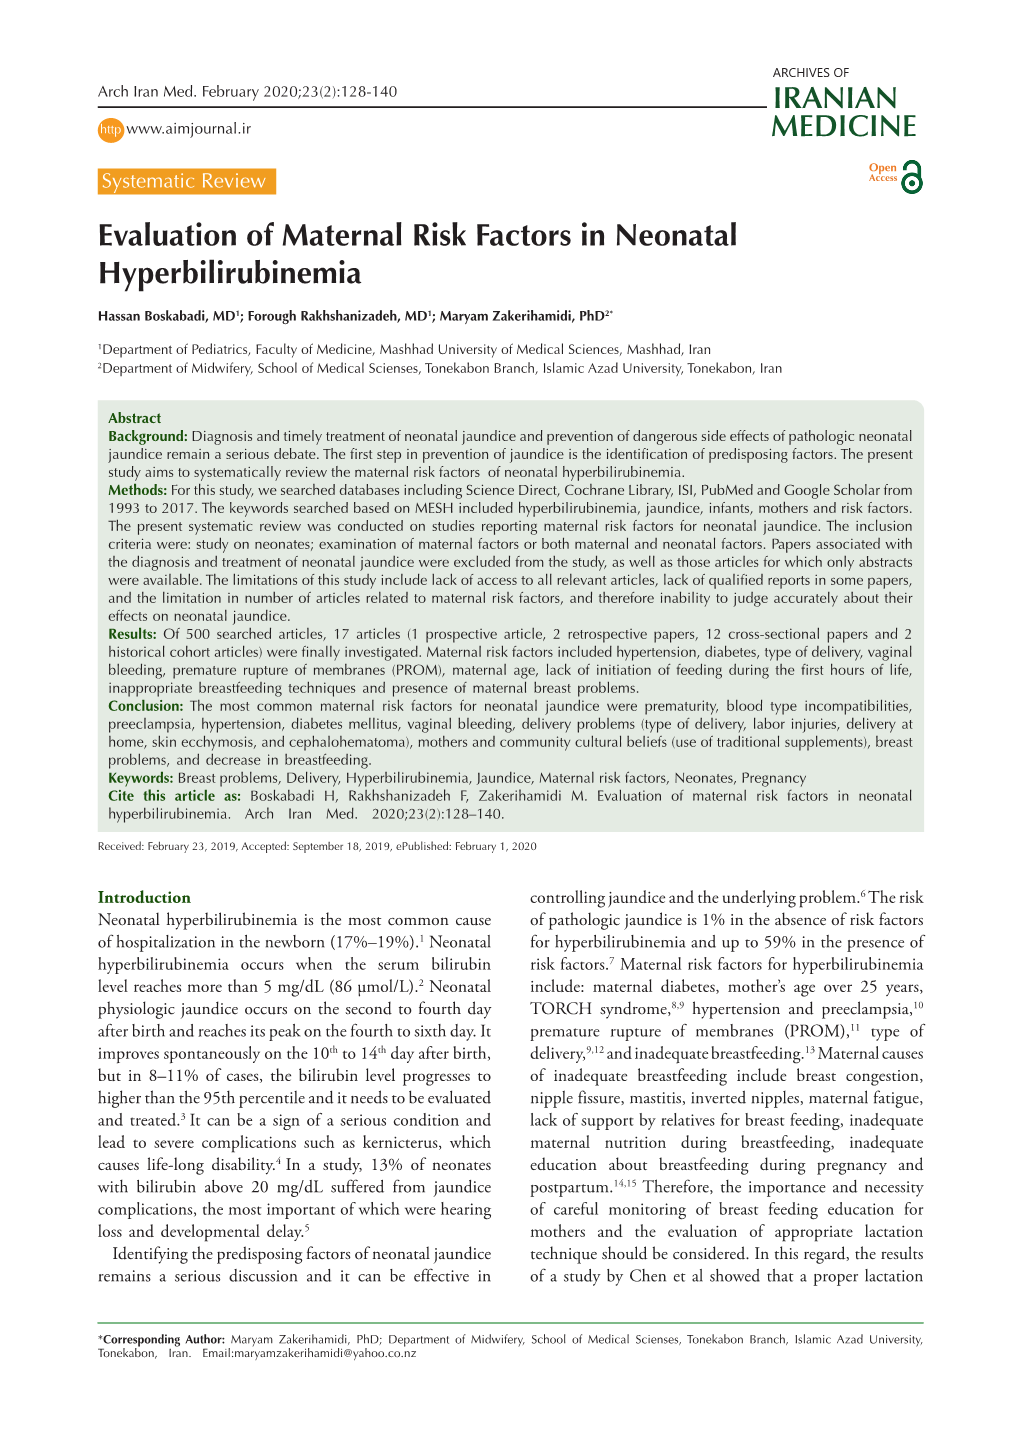 Evaluation of Maternal Risk Factors in Neonatal Hyperbilirubinemia